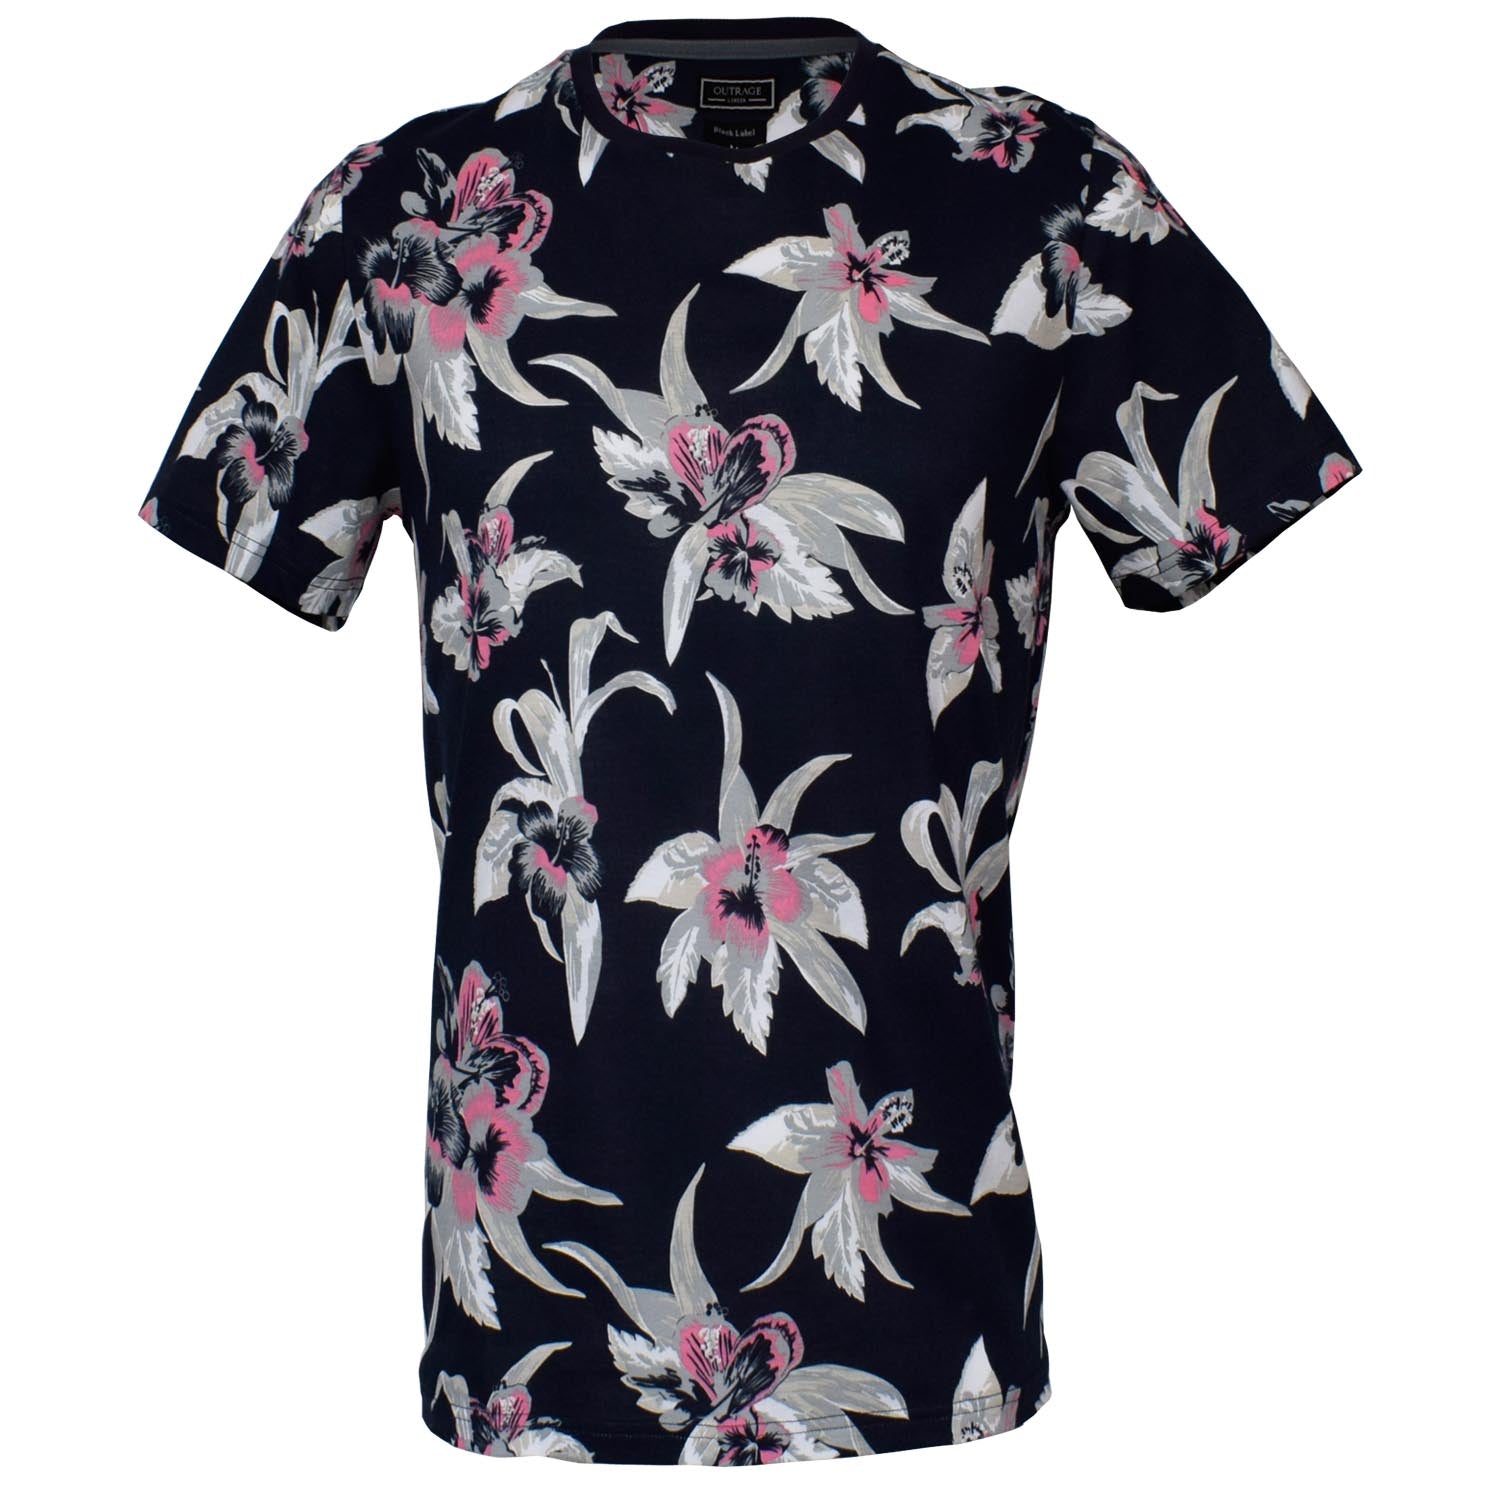 Outrage - All Over Print Paradise Floral T-Shirt - LabelledUp.com